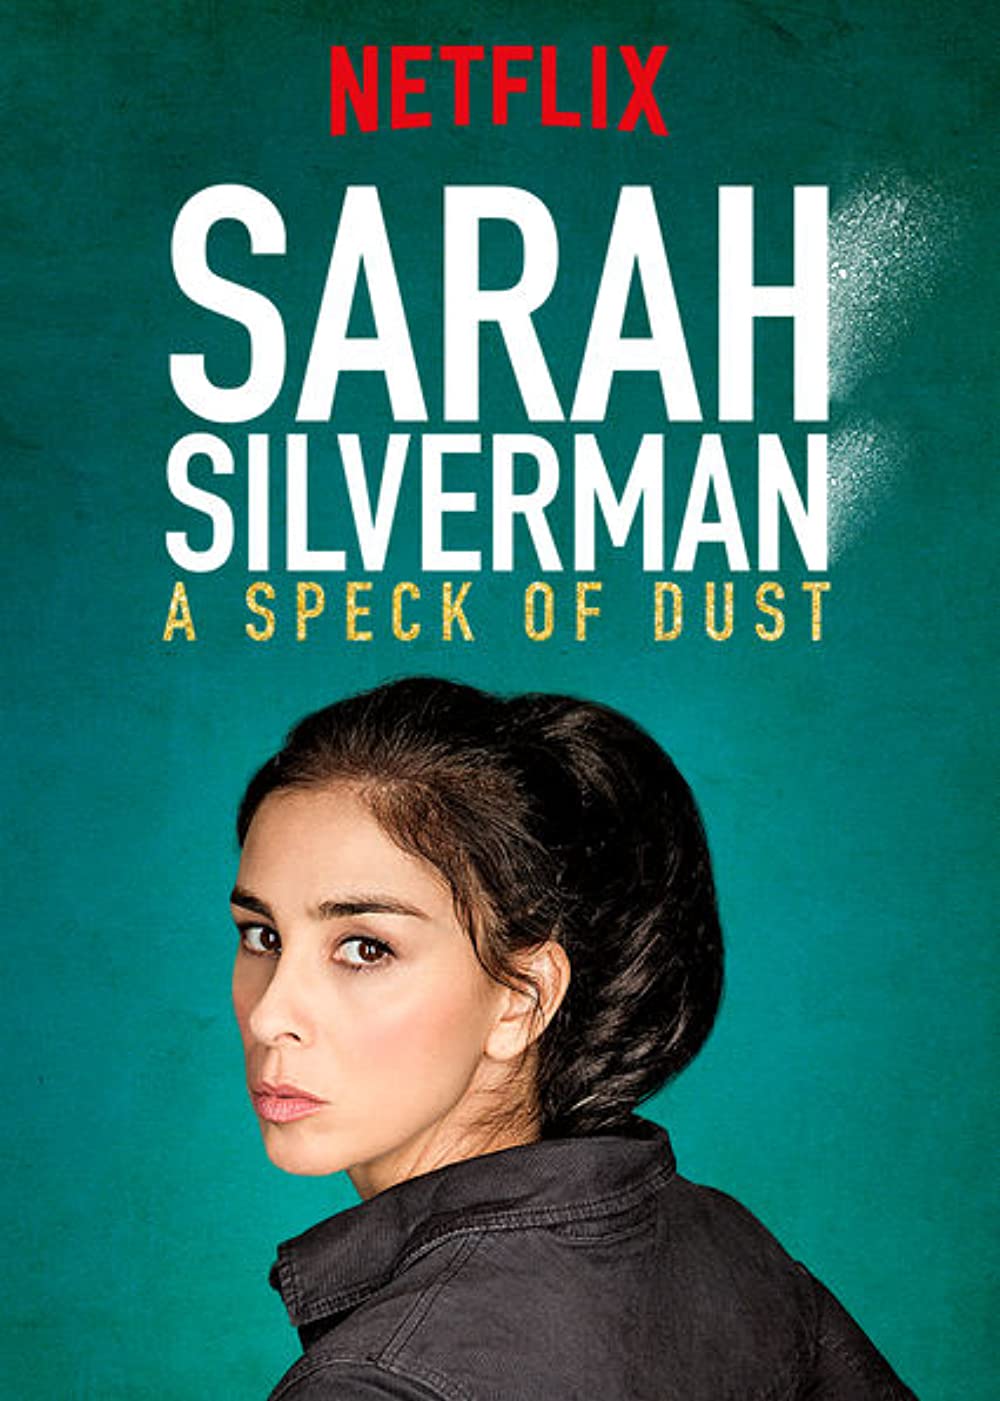 Sarah Silverman A Speck of Dust (2017) ดูหนังฟรีออนไลน์ หนังใหม่ Netflix